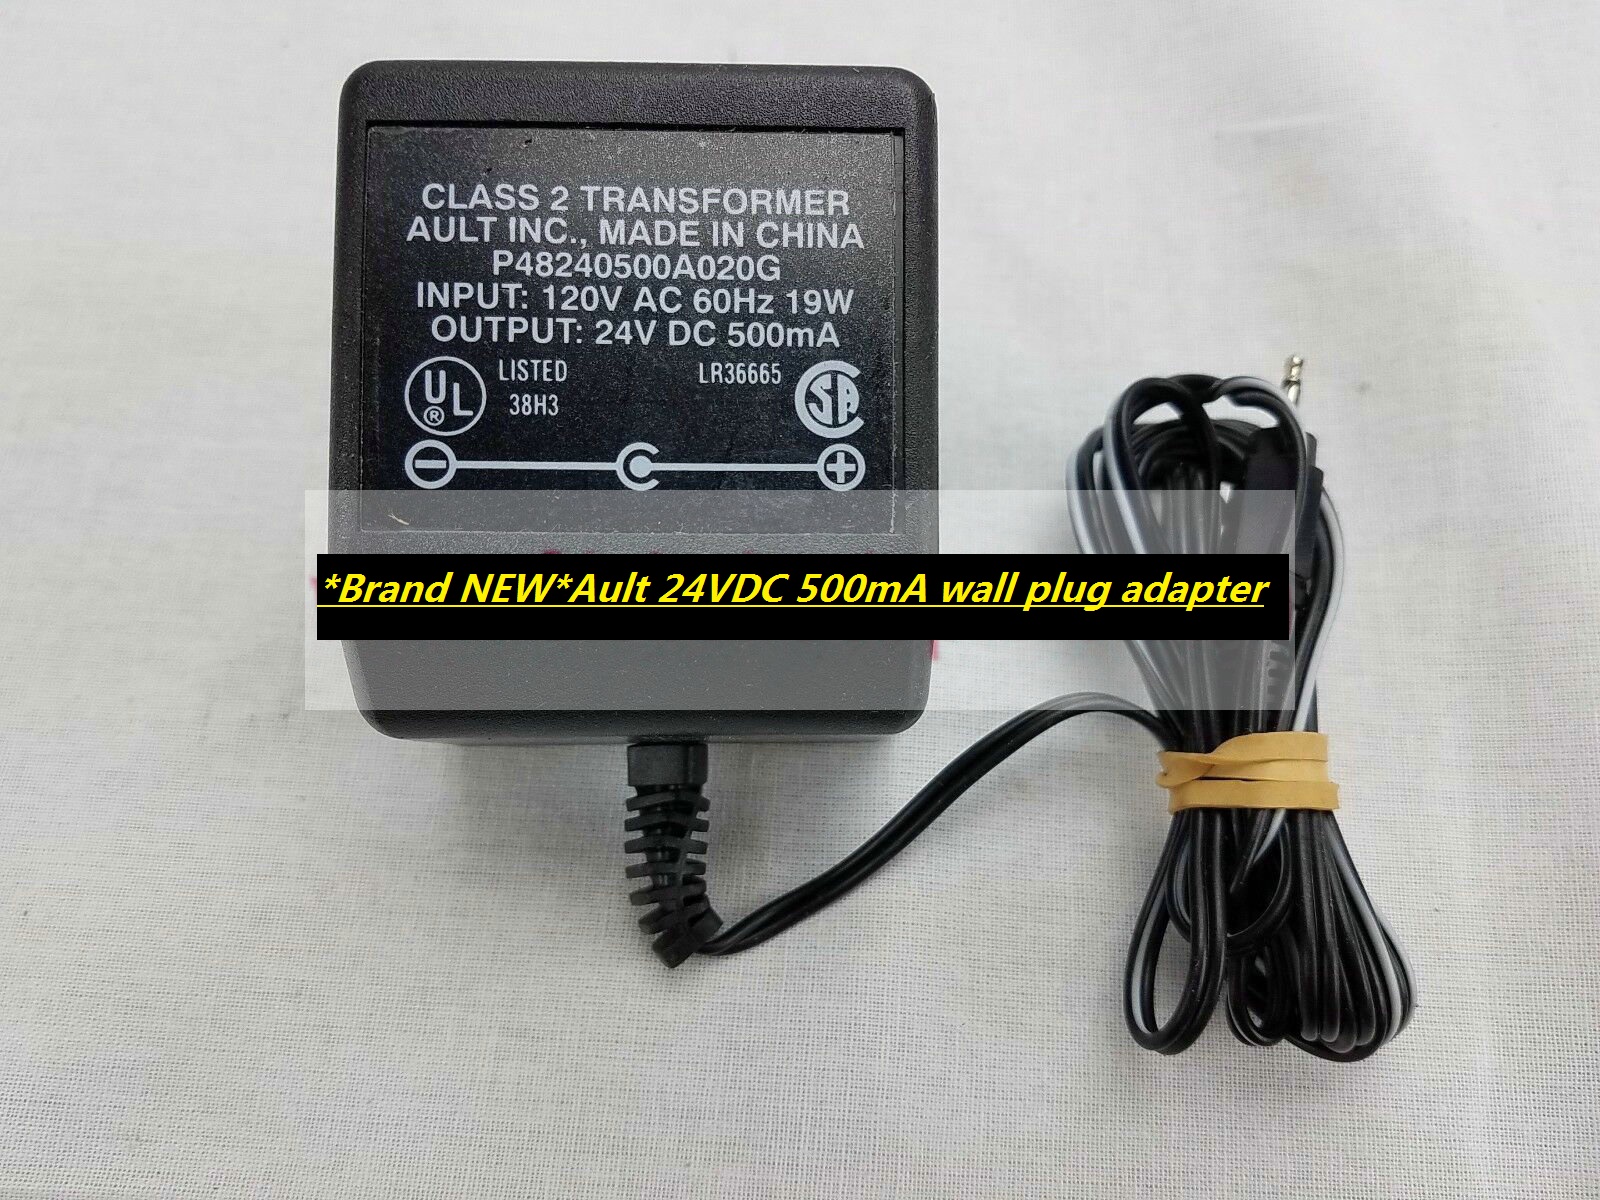 *Brand NEW*Ault Inc P48240500A020G Class 2 Transformer 24VDC 500mA wall plug adapter